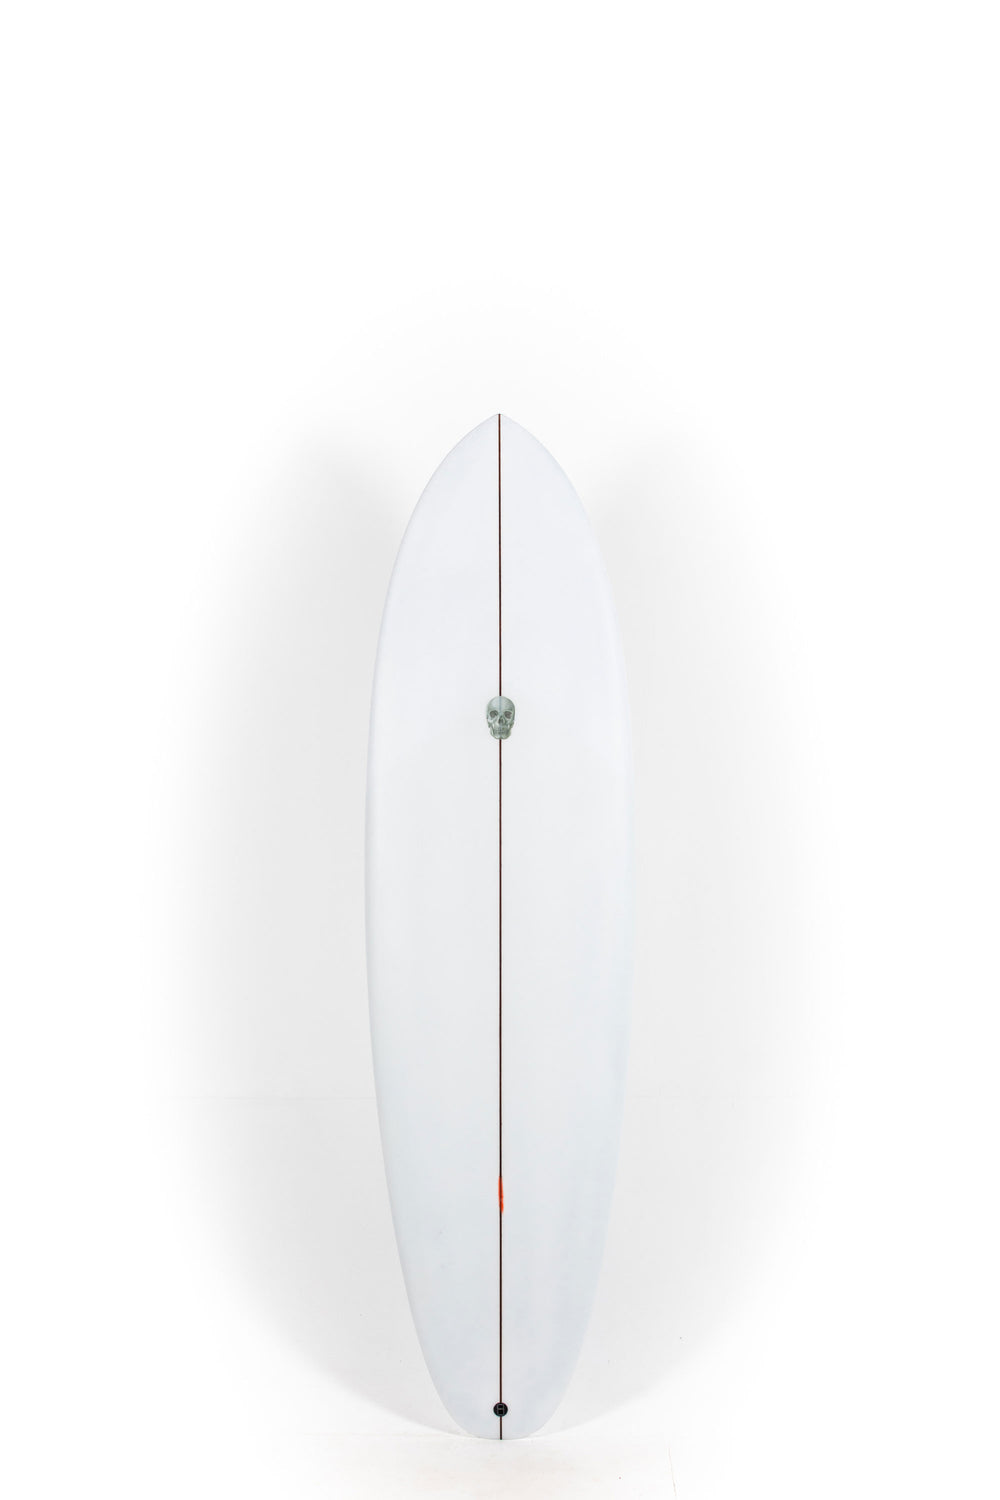 Pukas Surf Shop - Christenson Surfboards - TWIN TRACKER - 6'6